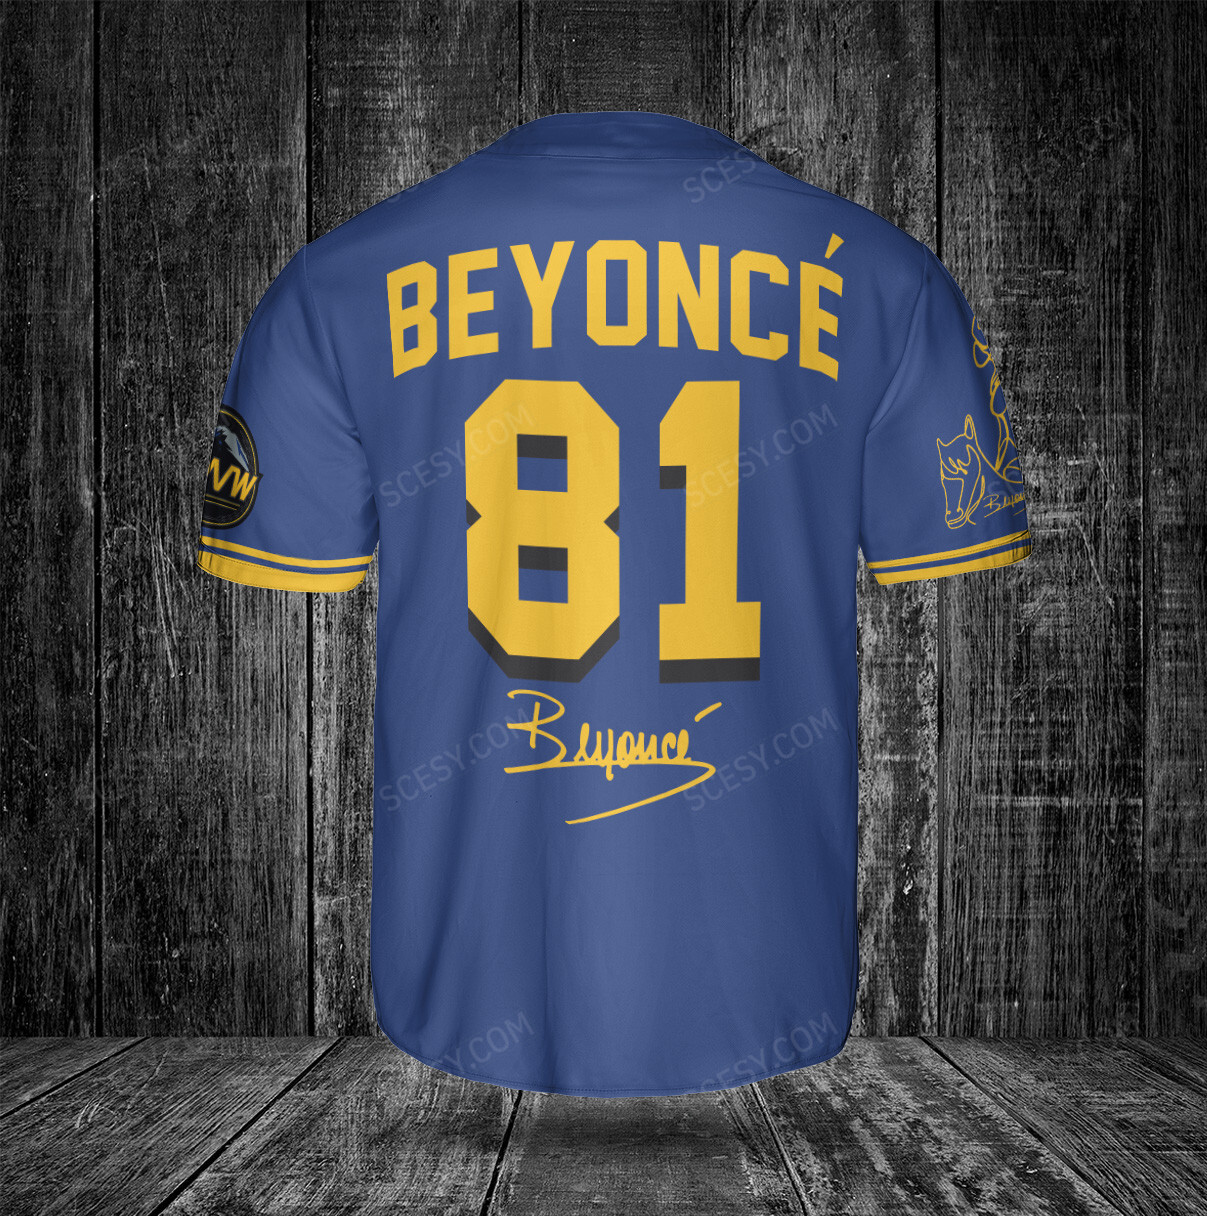 Seattle Mariners Beyonce Jersey Baseball Shirt White Custom Number And Name  - Freedomdesign